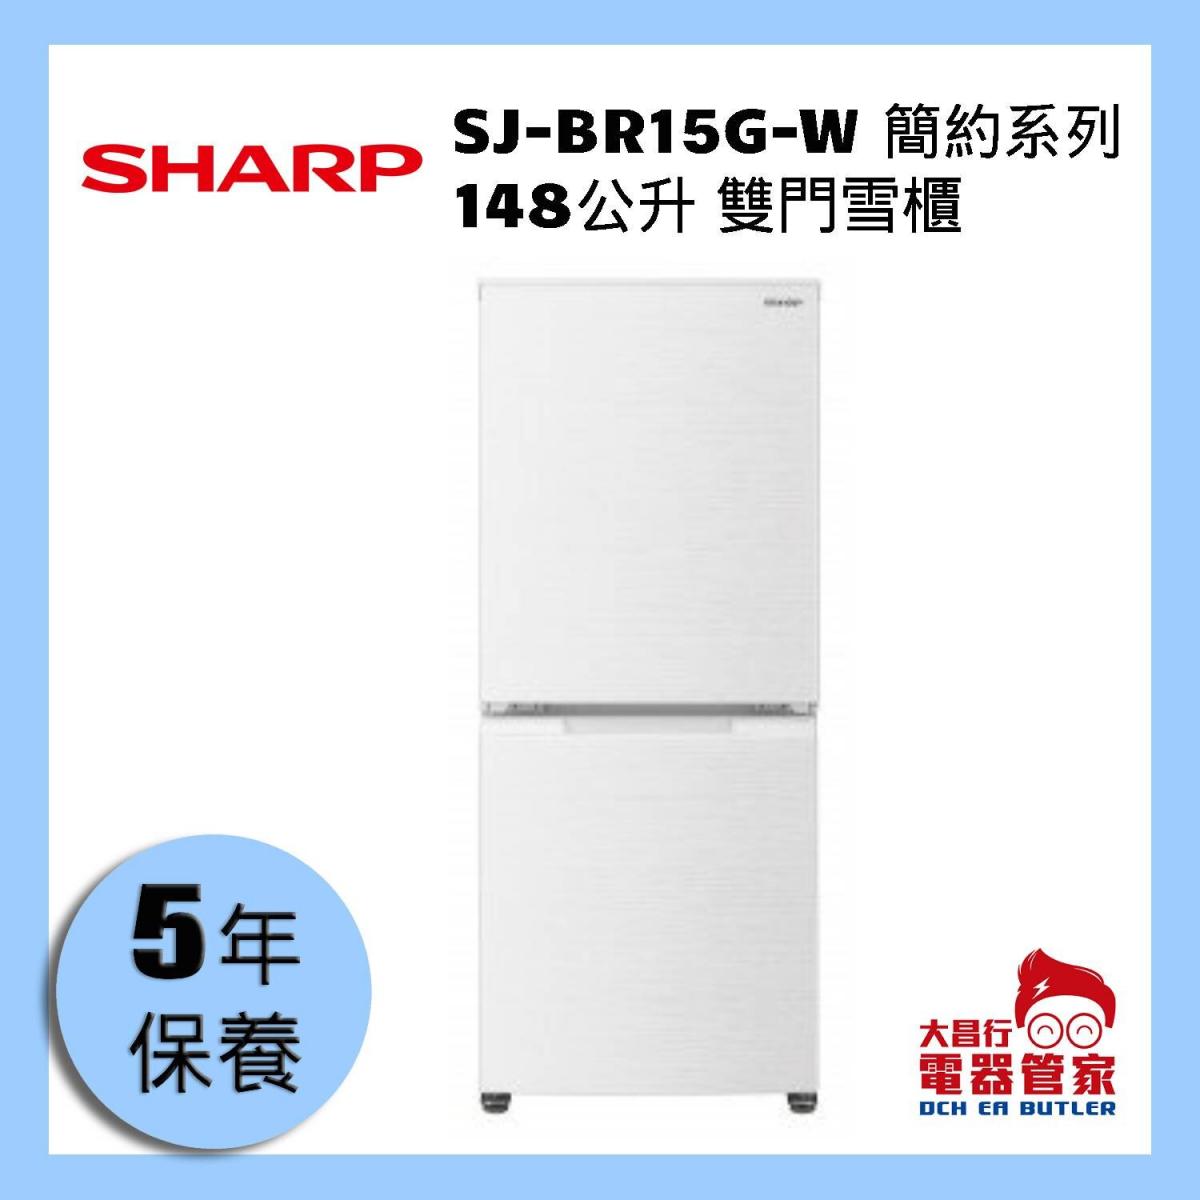 sharp | 148L Elegance Series Refrigerator SJ-BR15G-W | Color